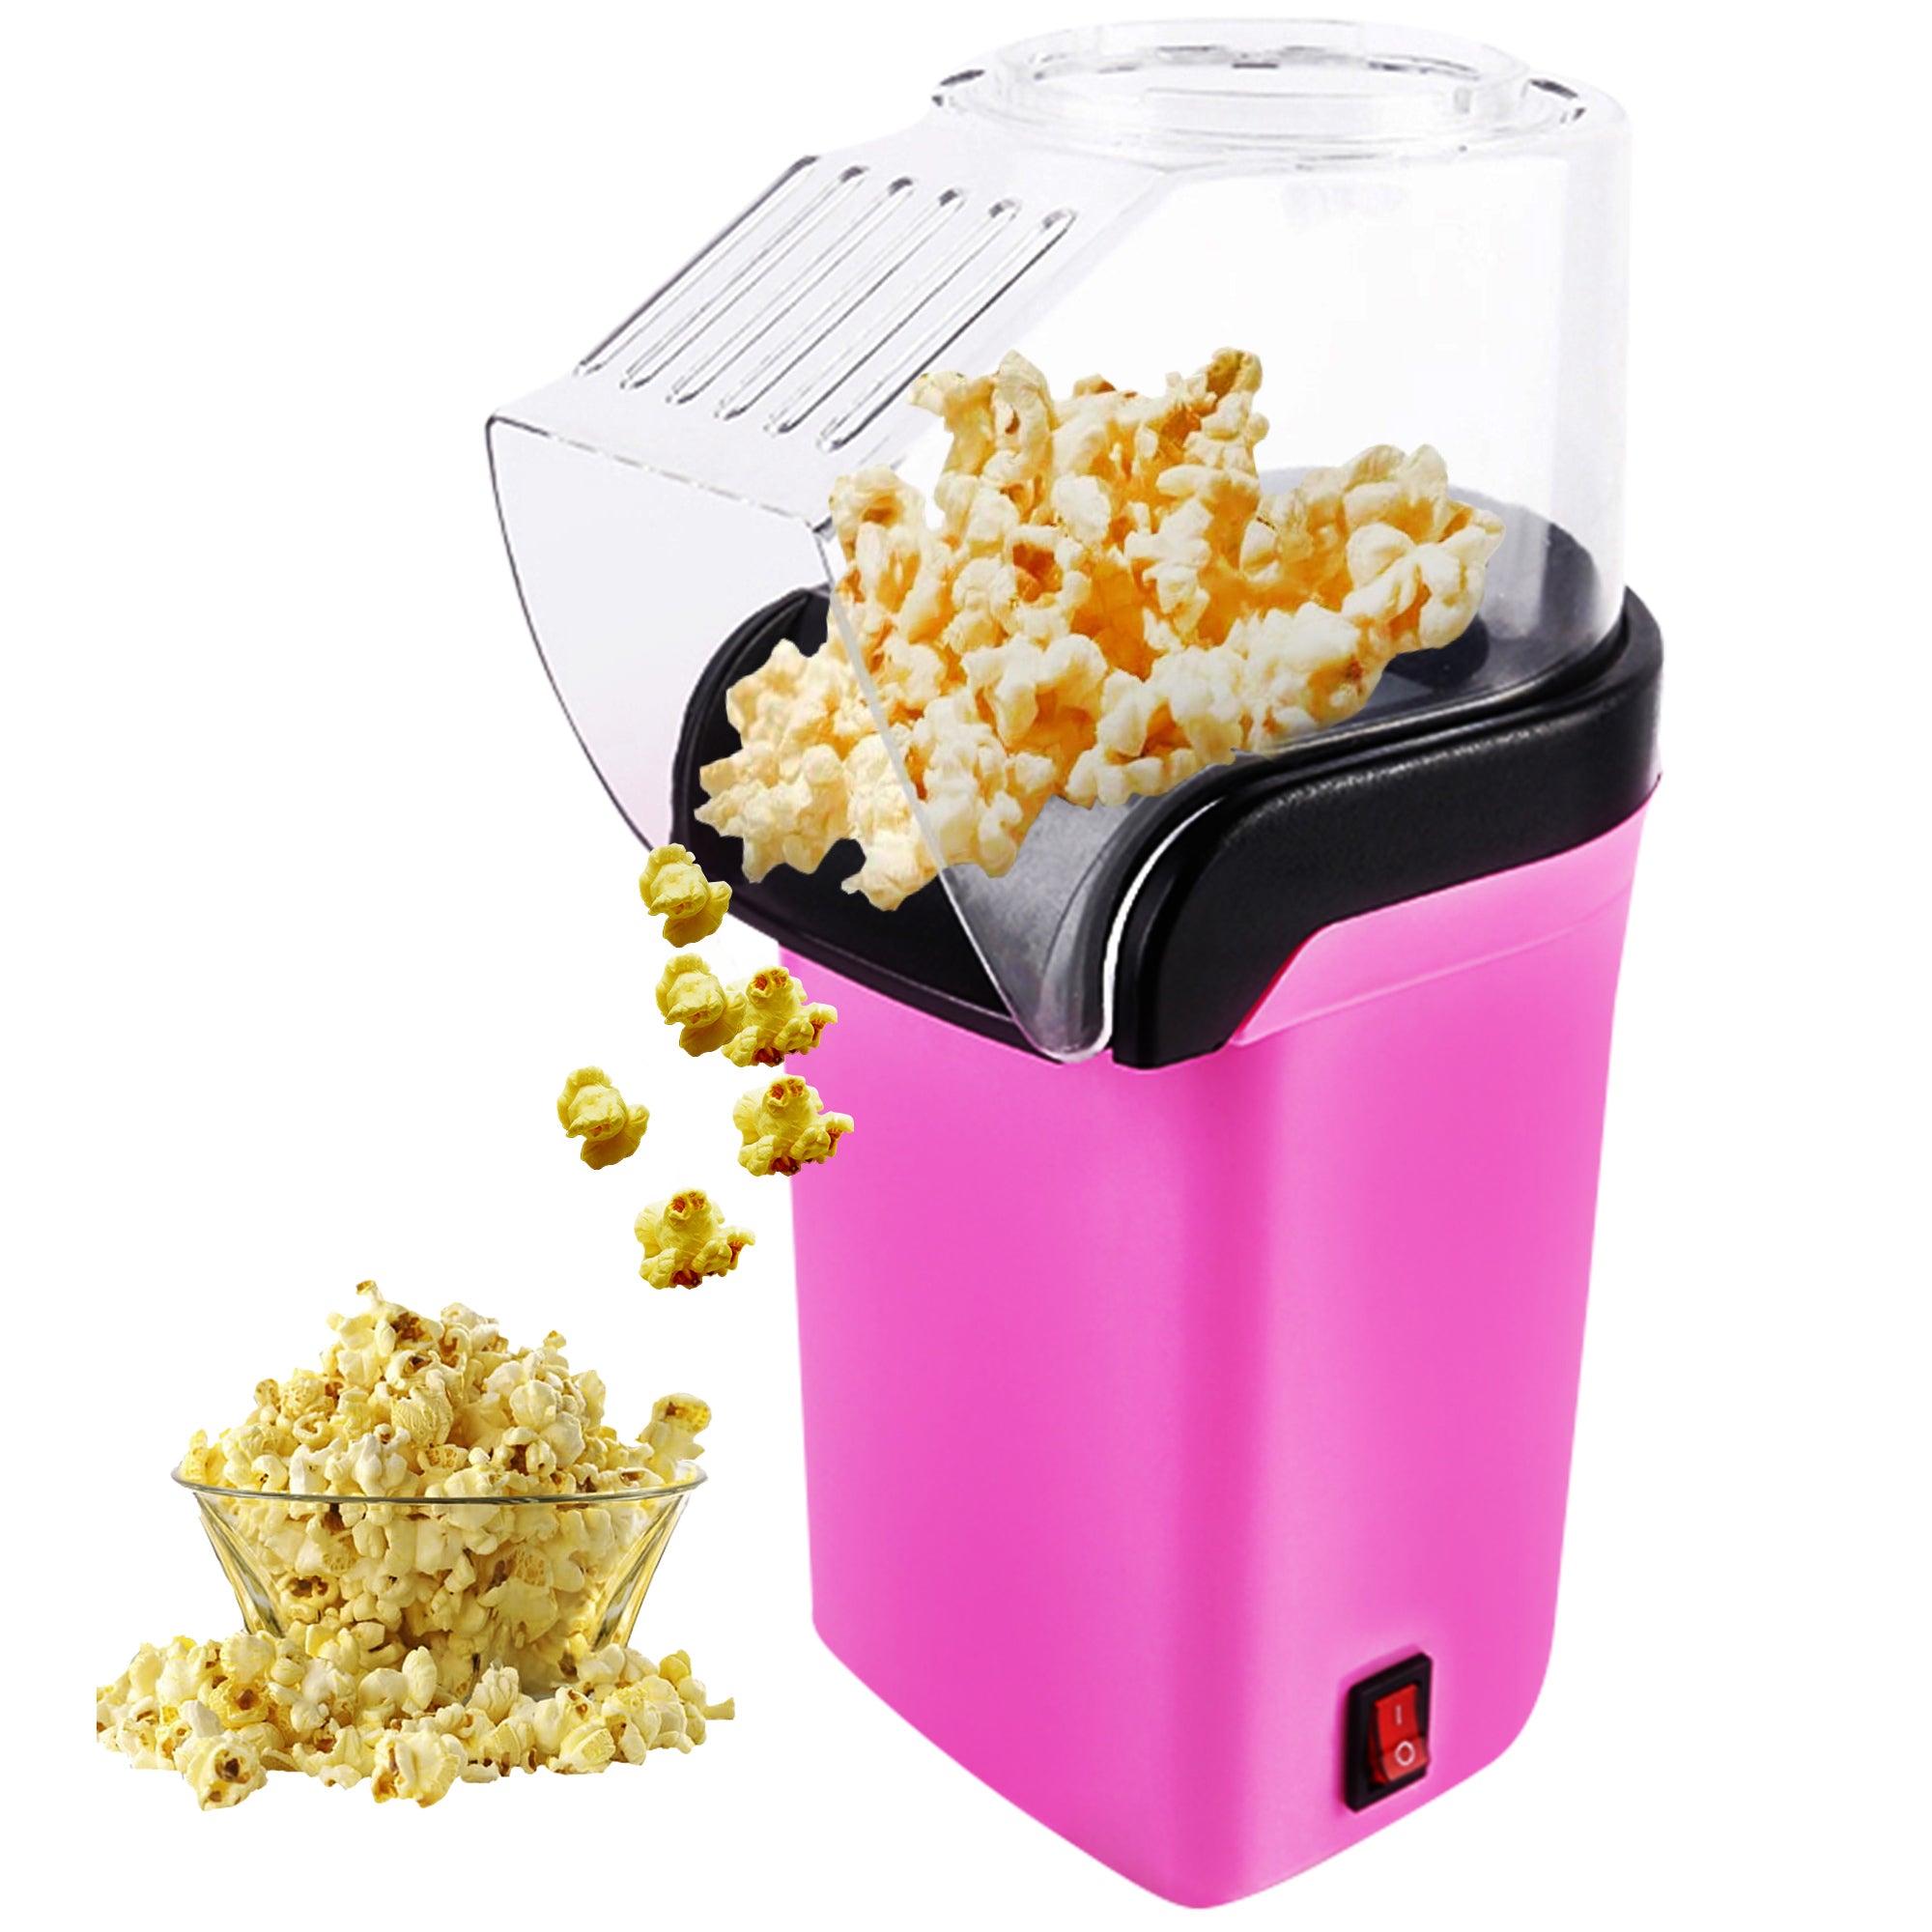 5Core Hot Air Popcorn Machine, 16 Cup, Electric Oil-Free Pop Corn Kernel Popper BPA-Free Food Safe Pink